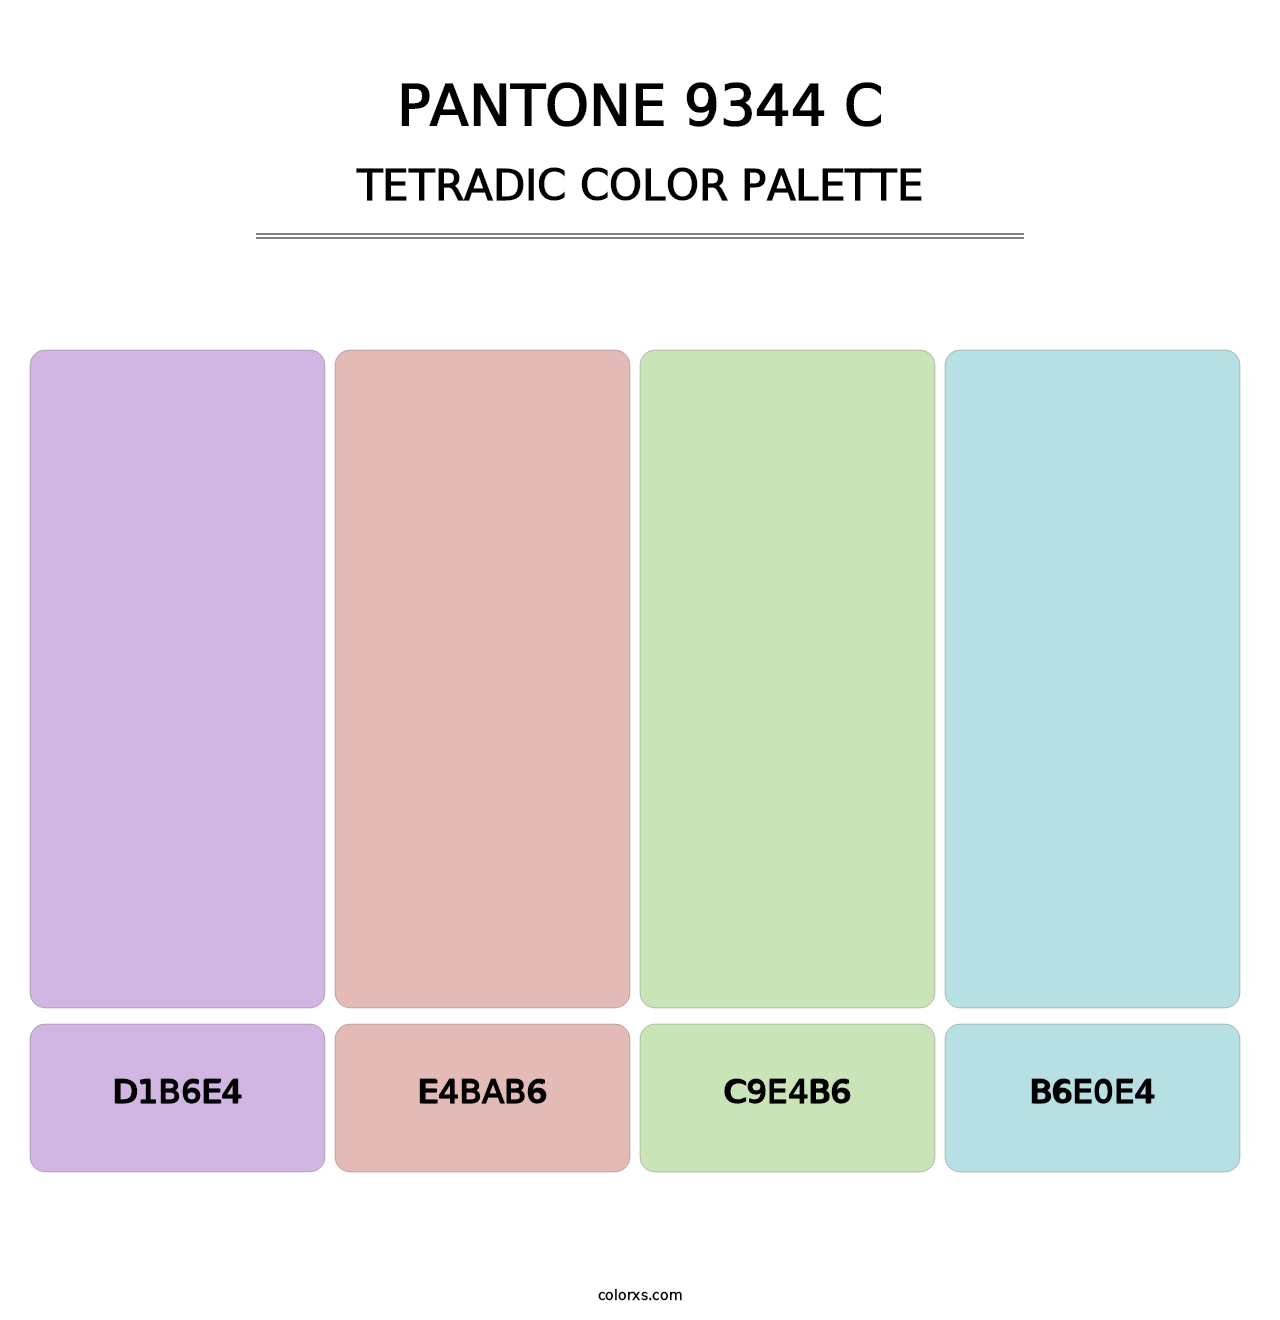 PANTONE 9344 C - Tetradic Color Palette